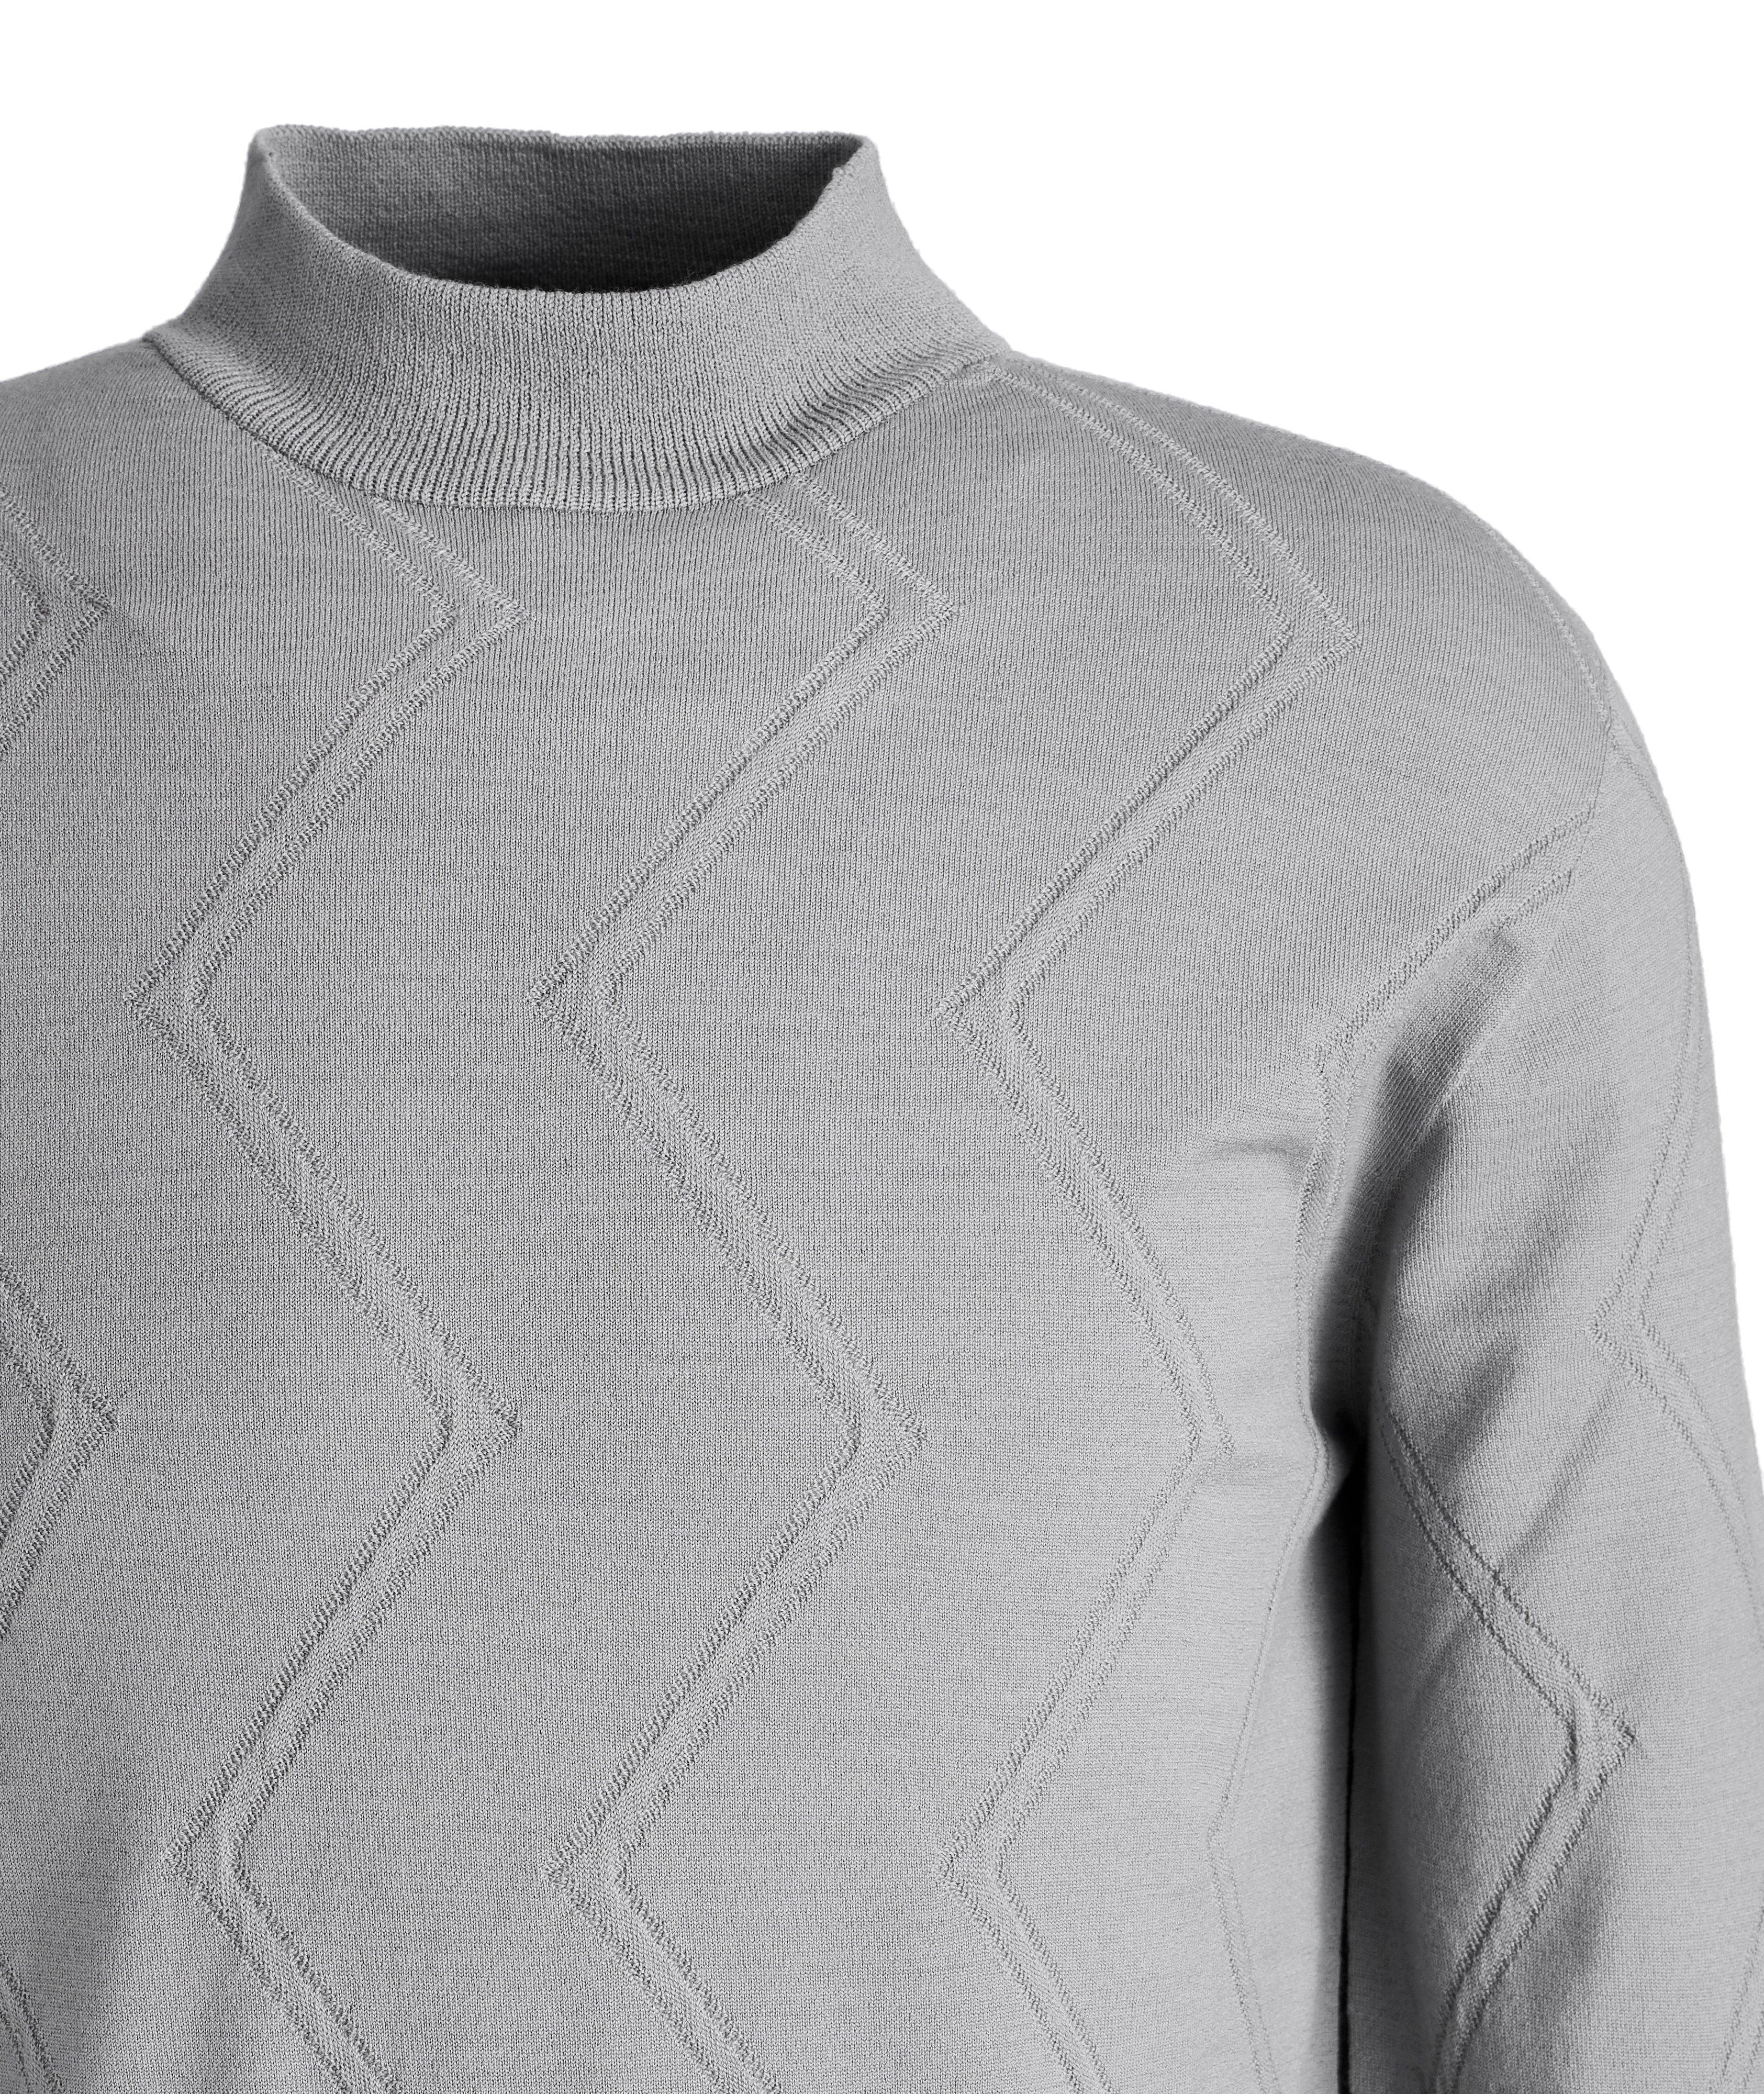 Wool-Blend Mock Neck Sweater image 1